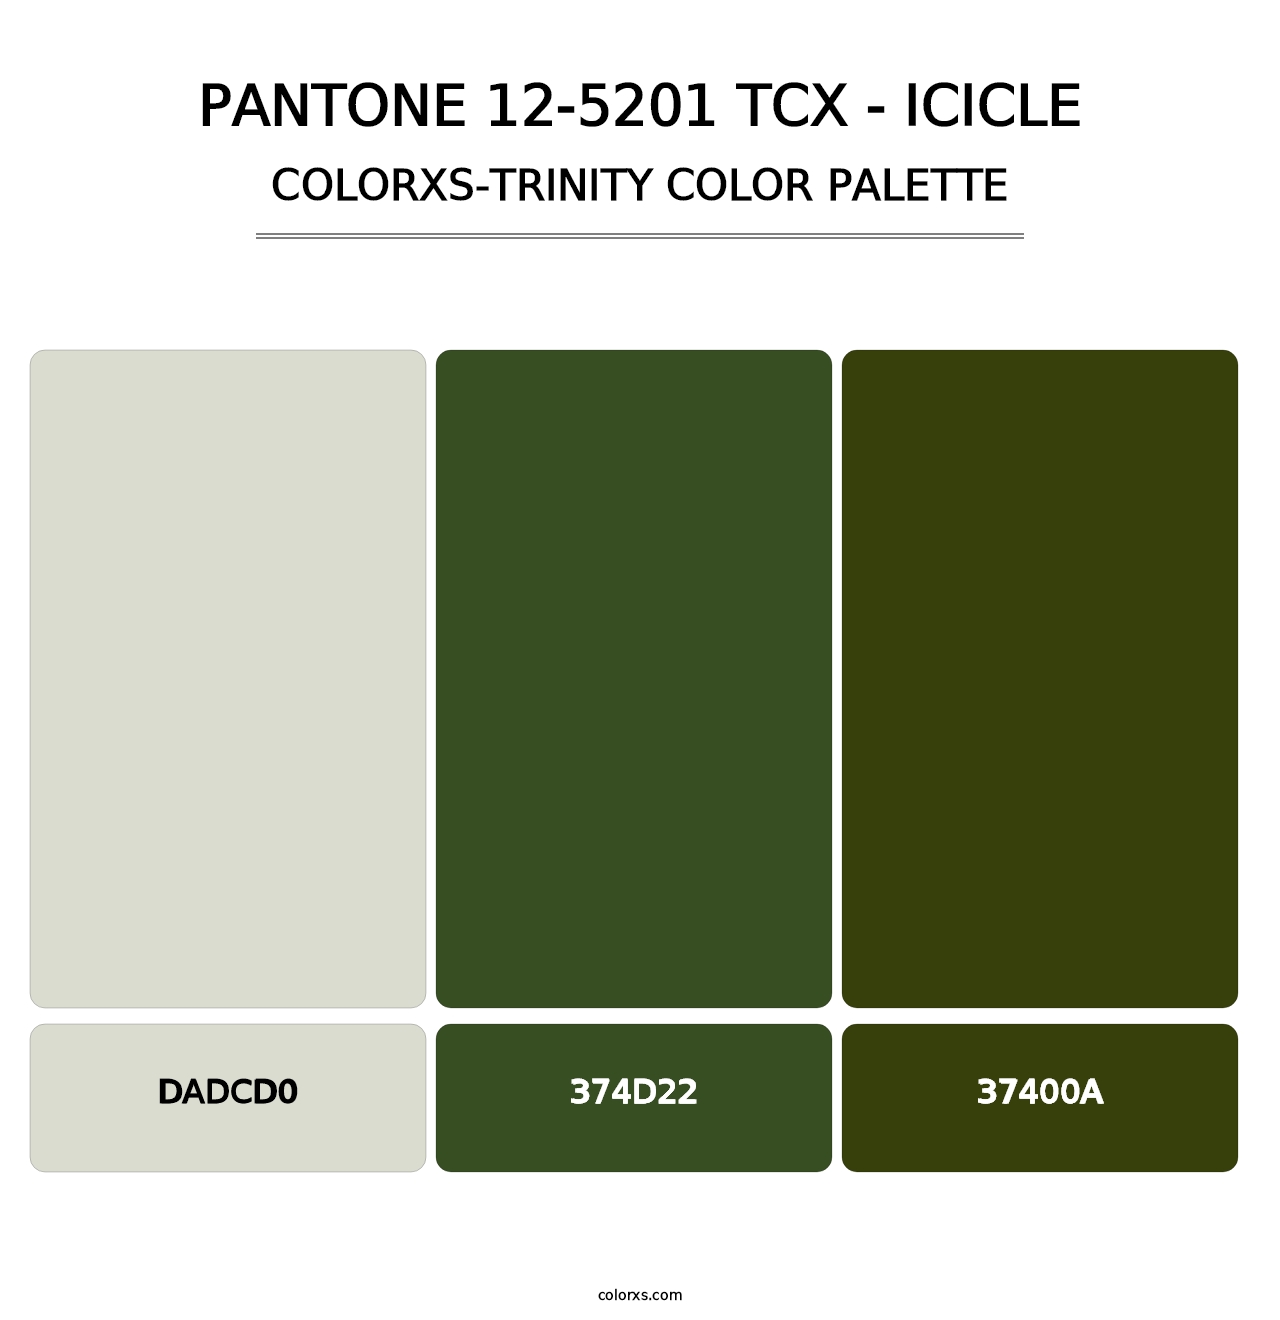 PANTONE 12-5201 TCX - Icicle - Colorxs Trinity Palette